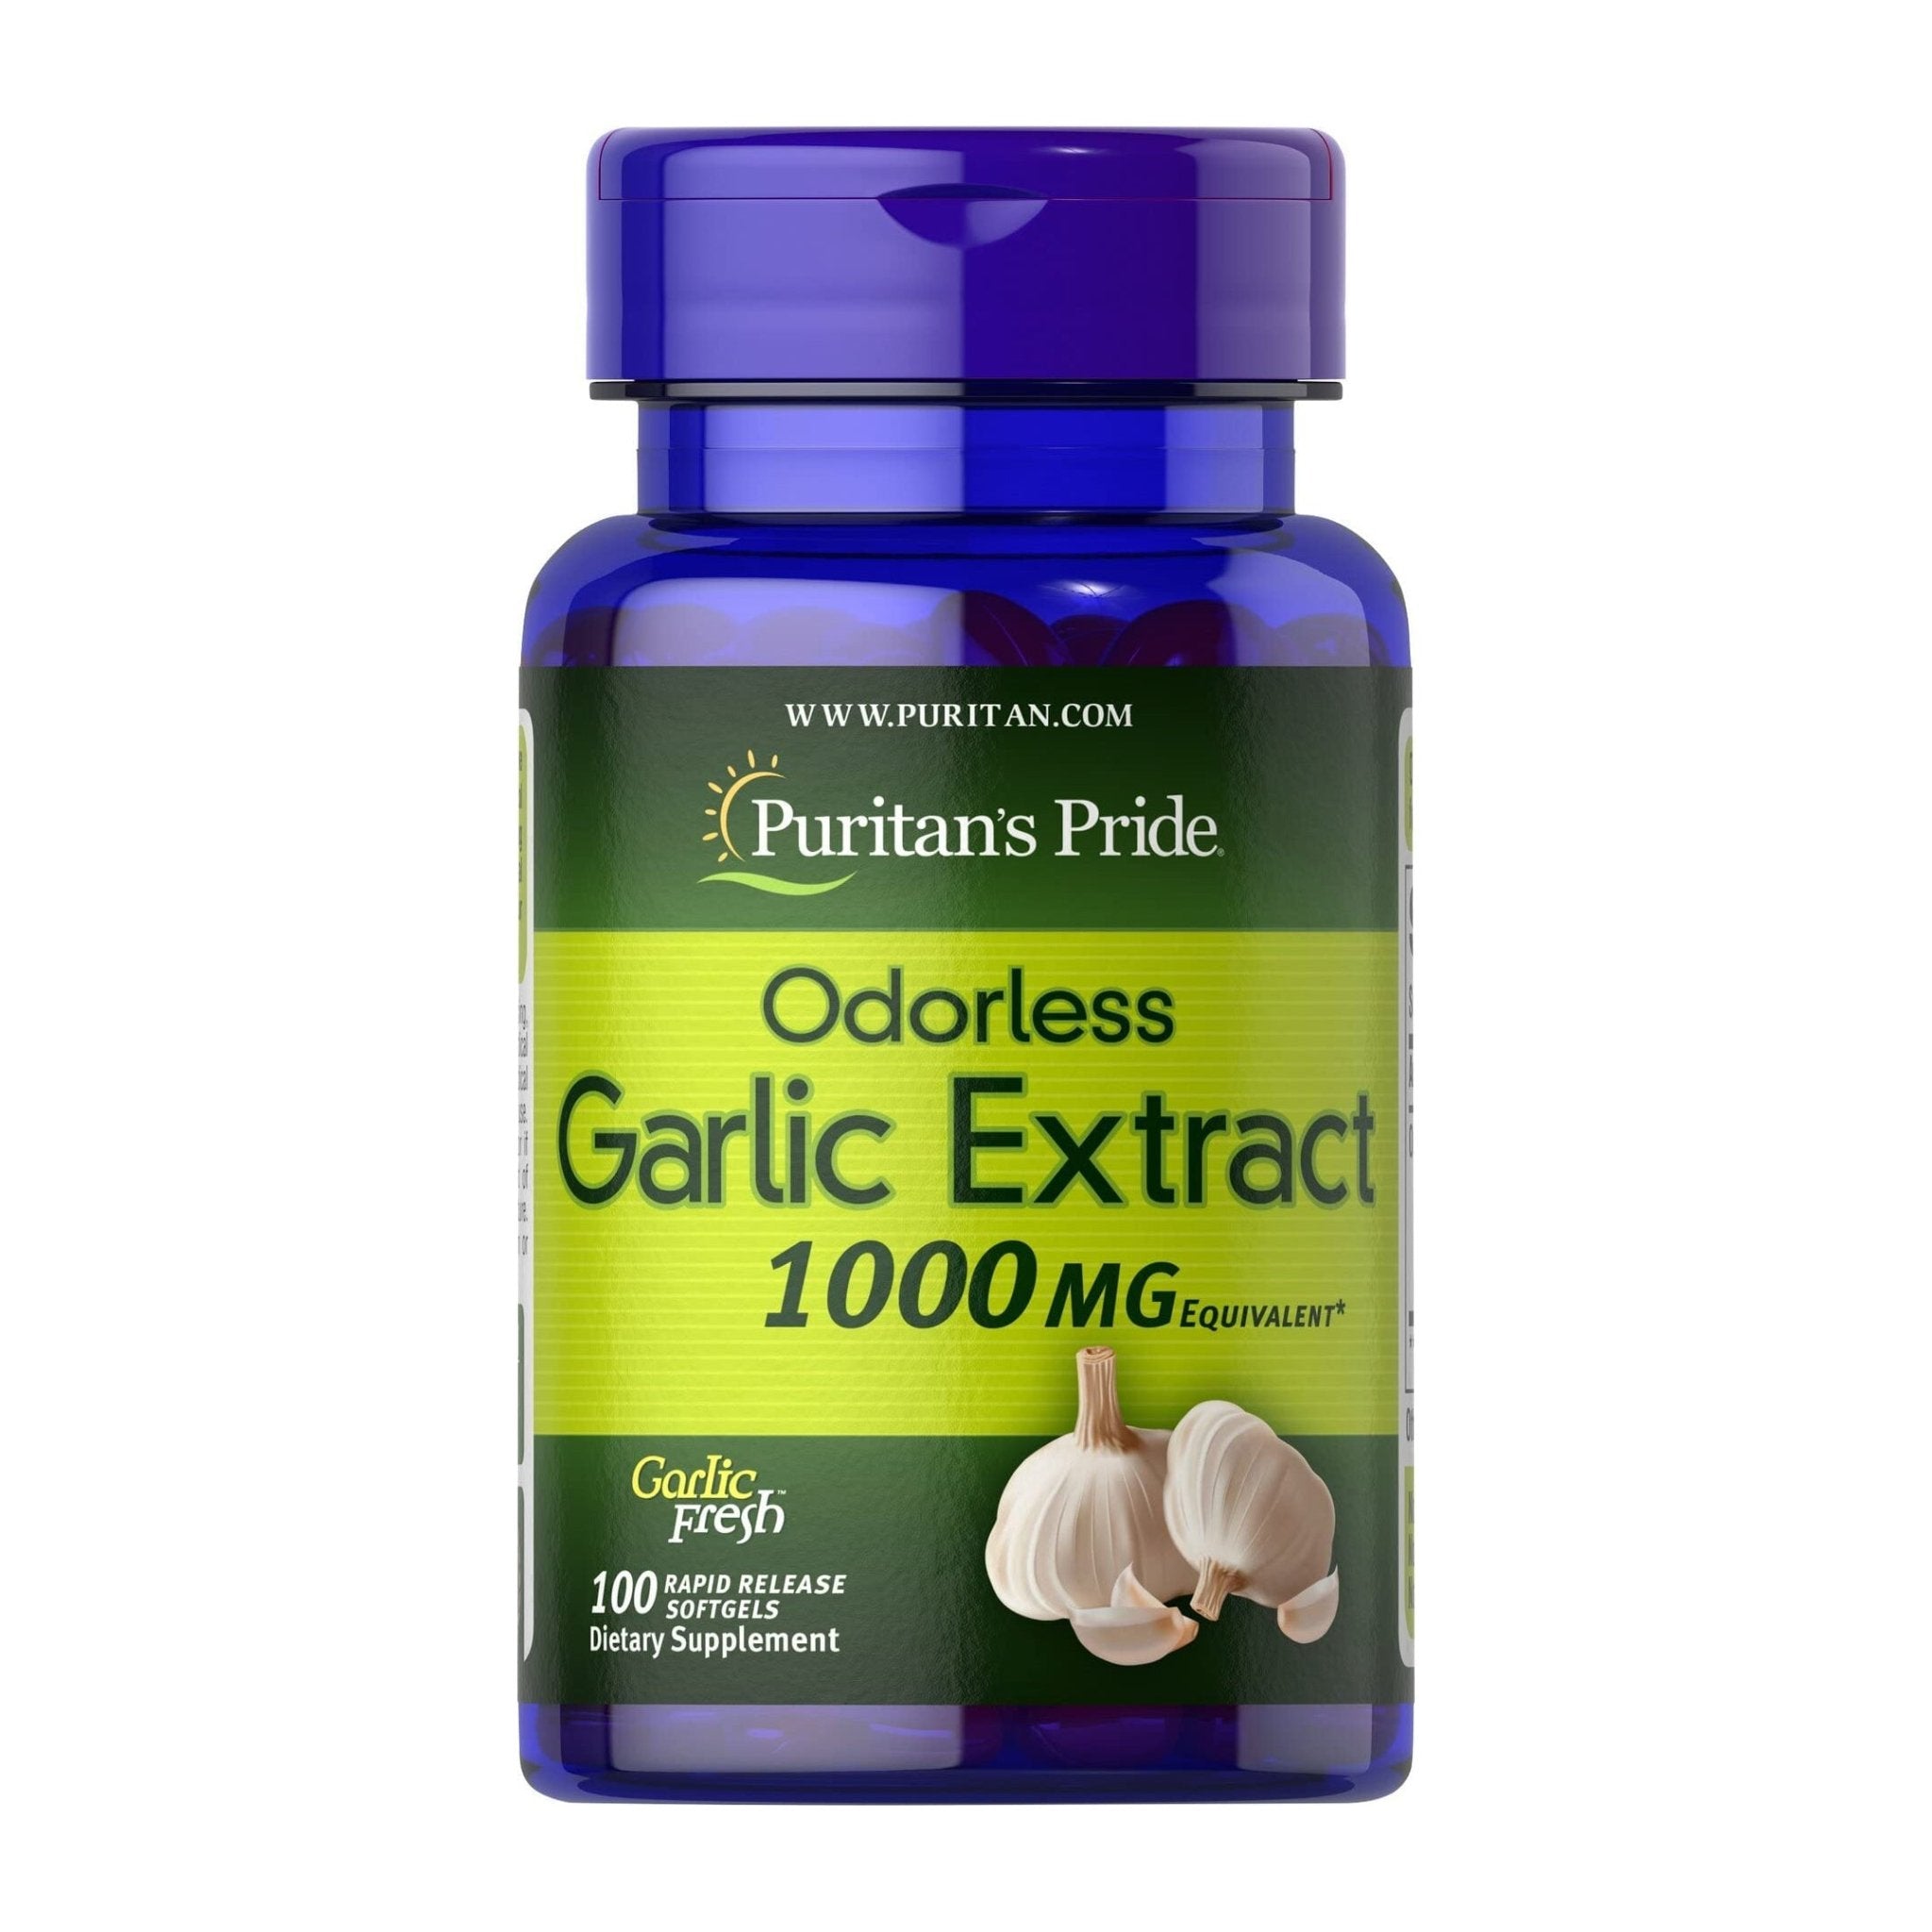 Puritan’s Pride Odorless Garlic Extract 1000mg - 100 Tablet - Bloom Pharmacy